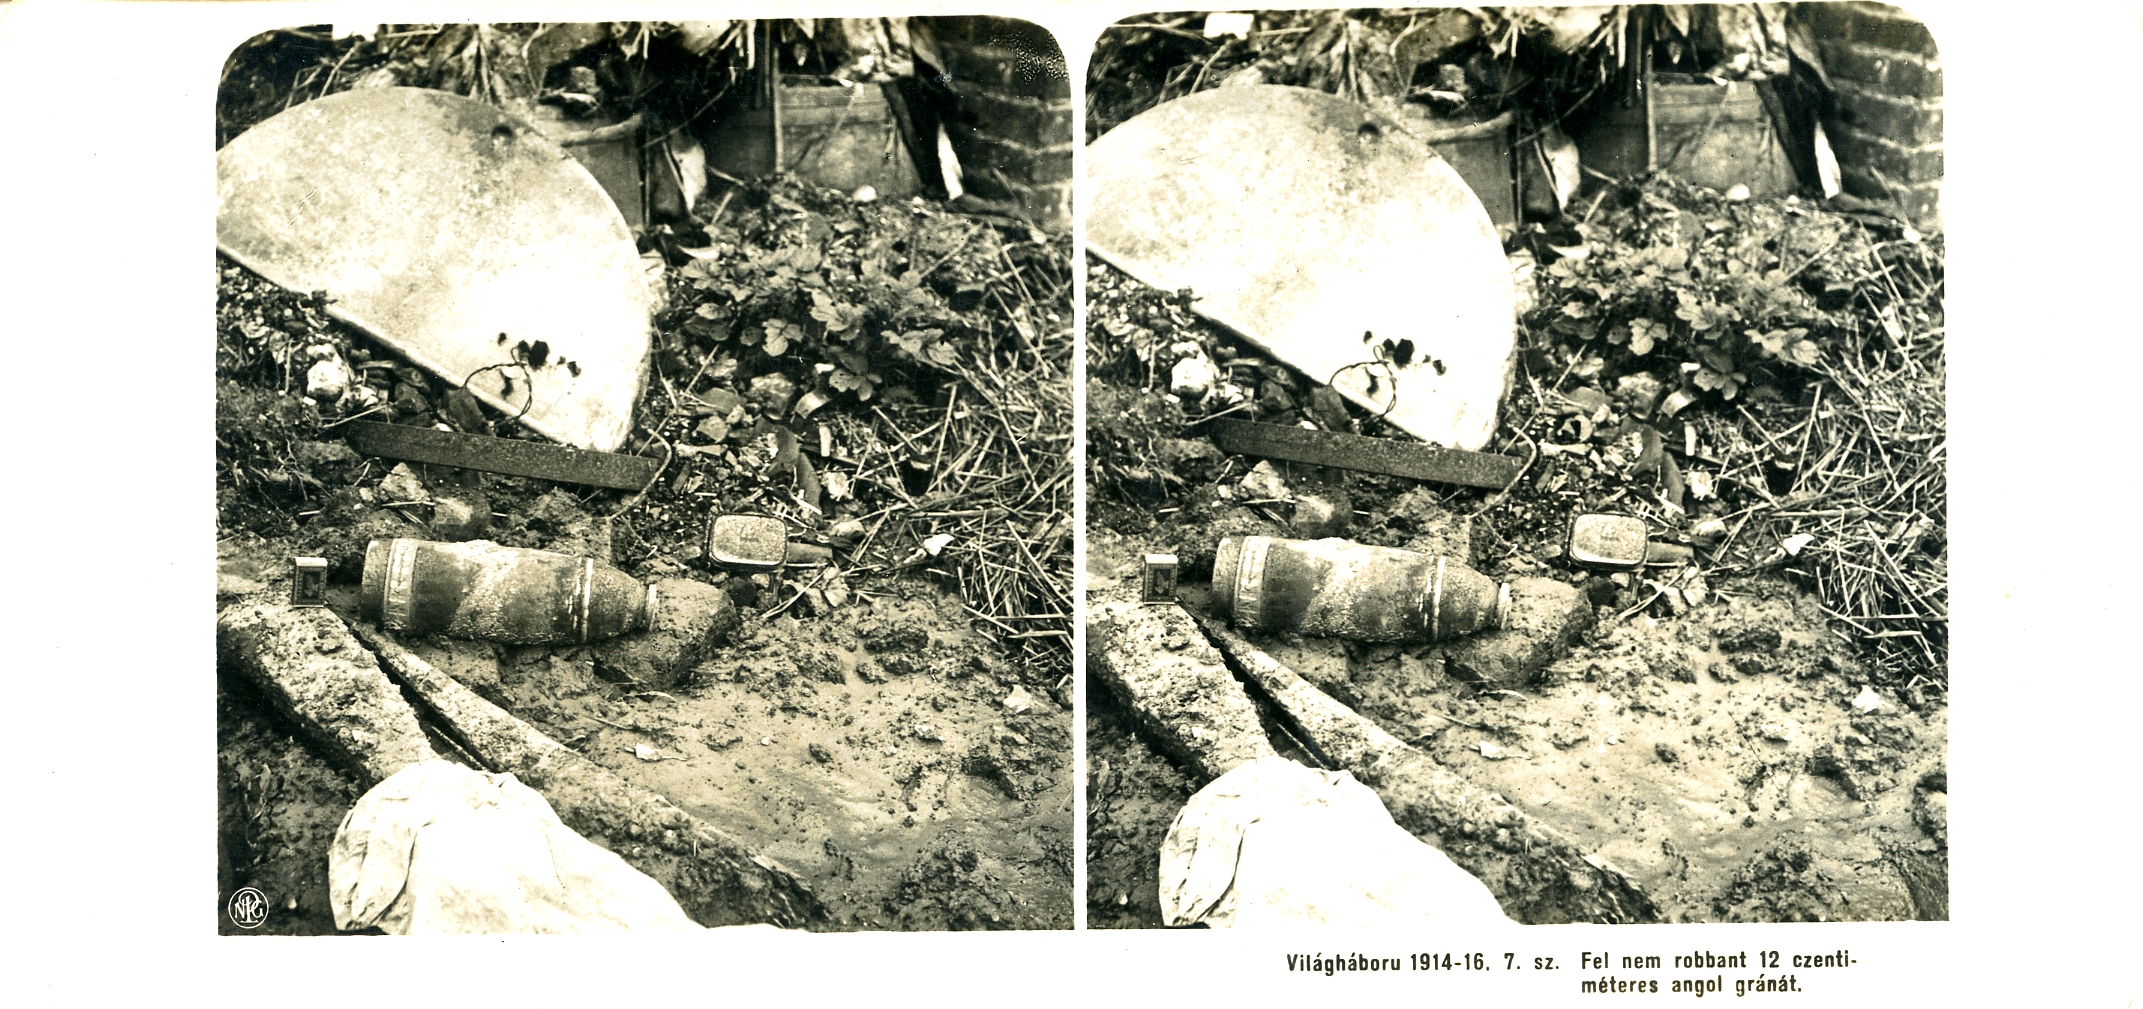 "Fel nem robbant 12 czentiméteres angol gránát" - Undetonated 12-centimeter British shell.